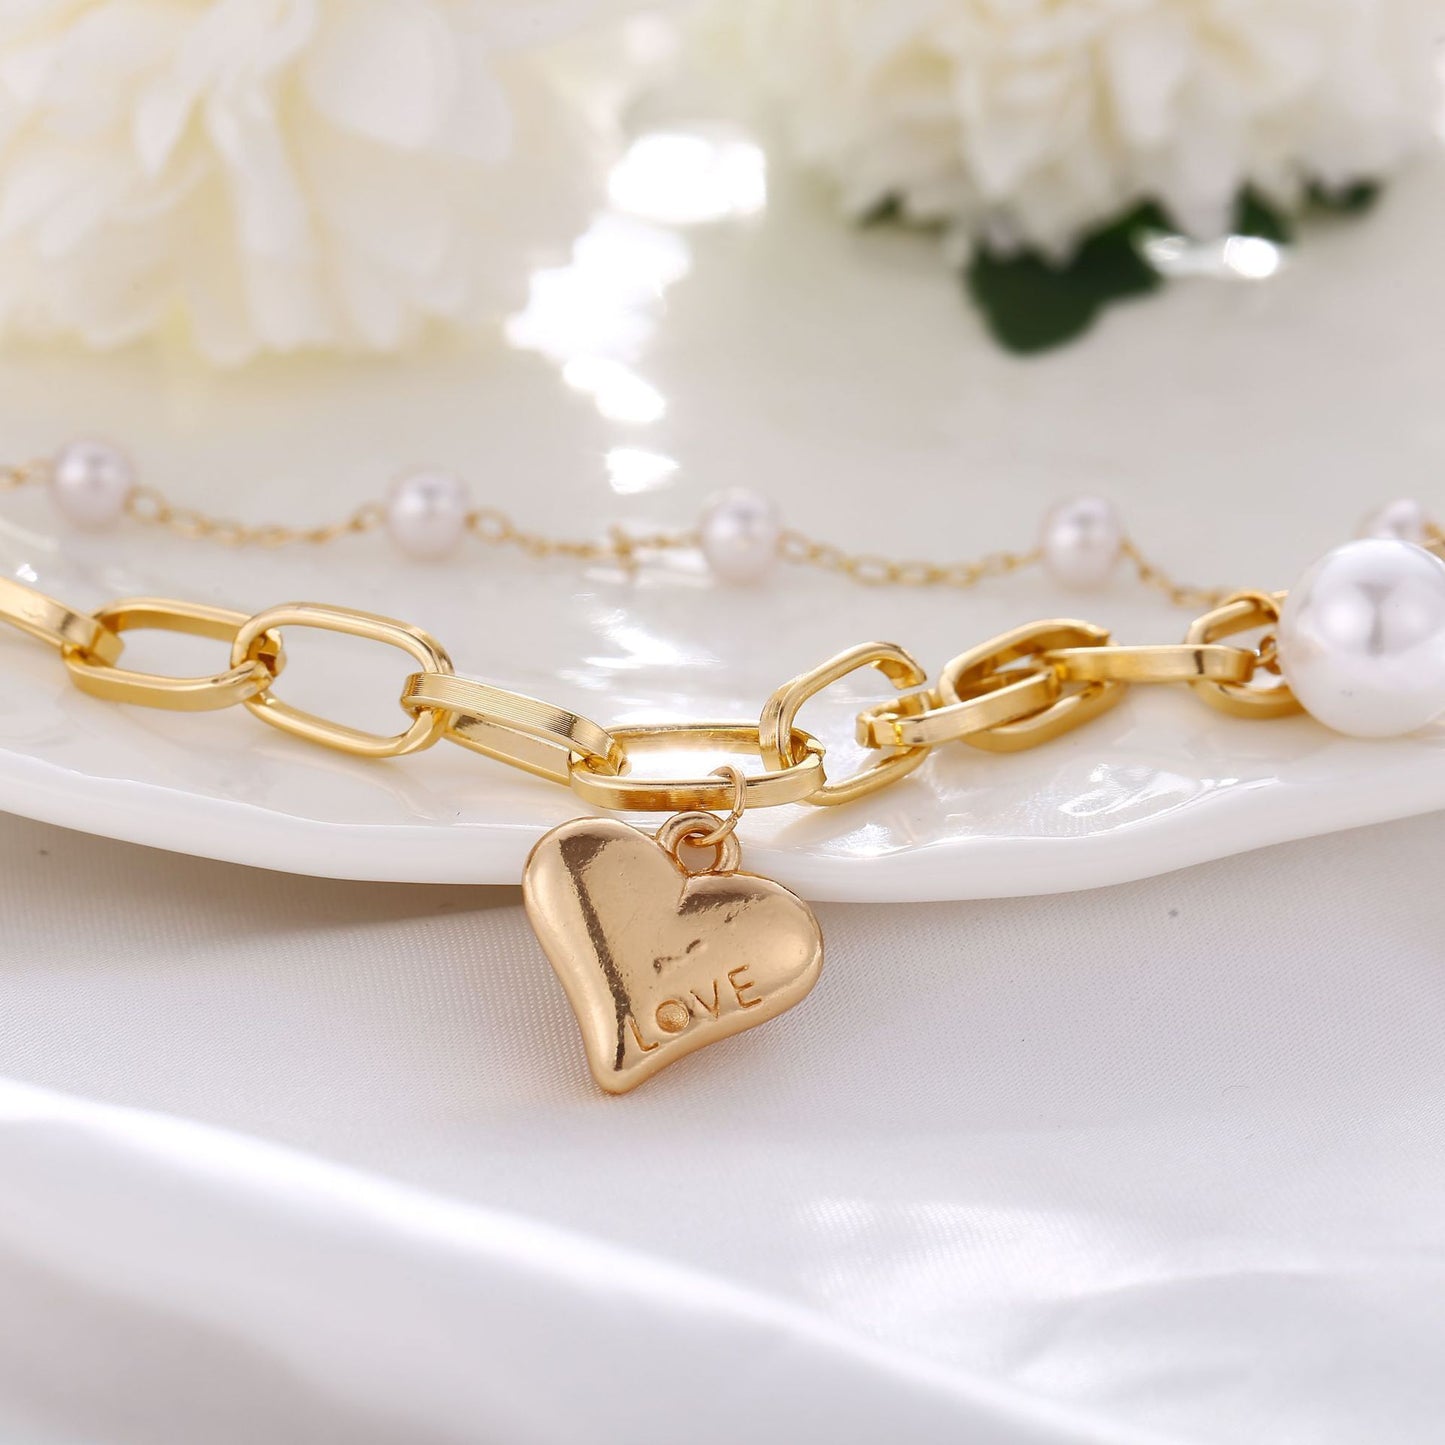 2 Piece Heart and Pearl Bracelet Set 18K Gold Plated Bracelet